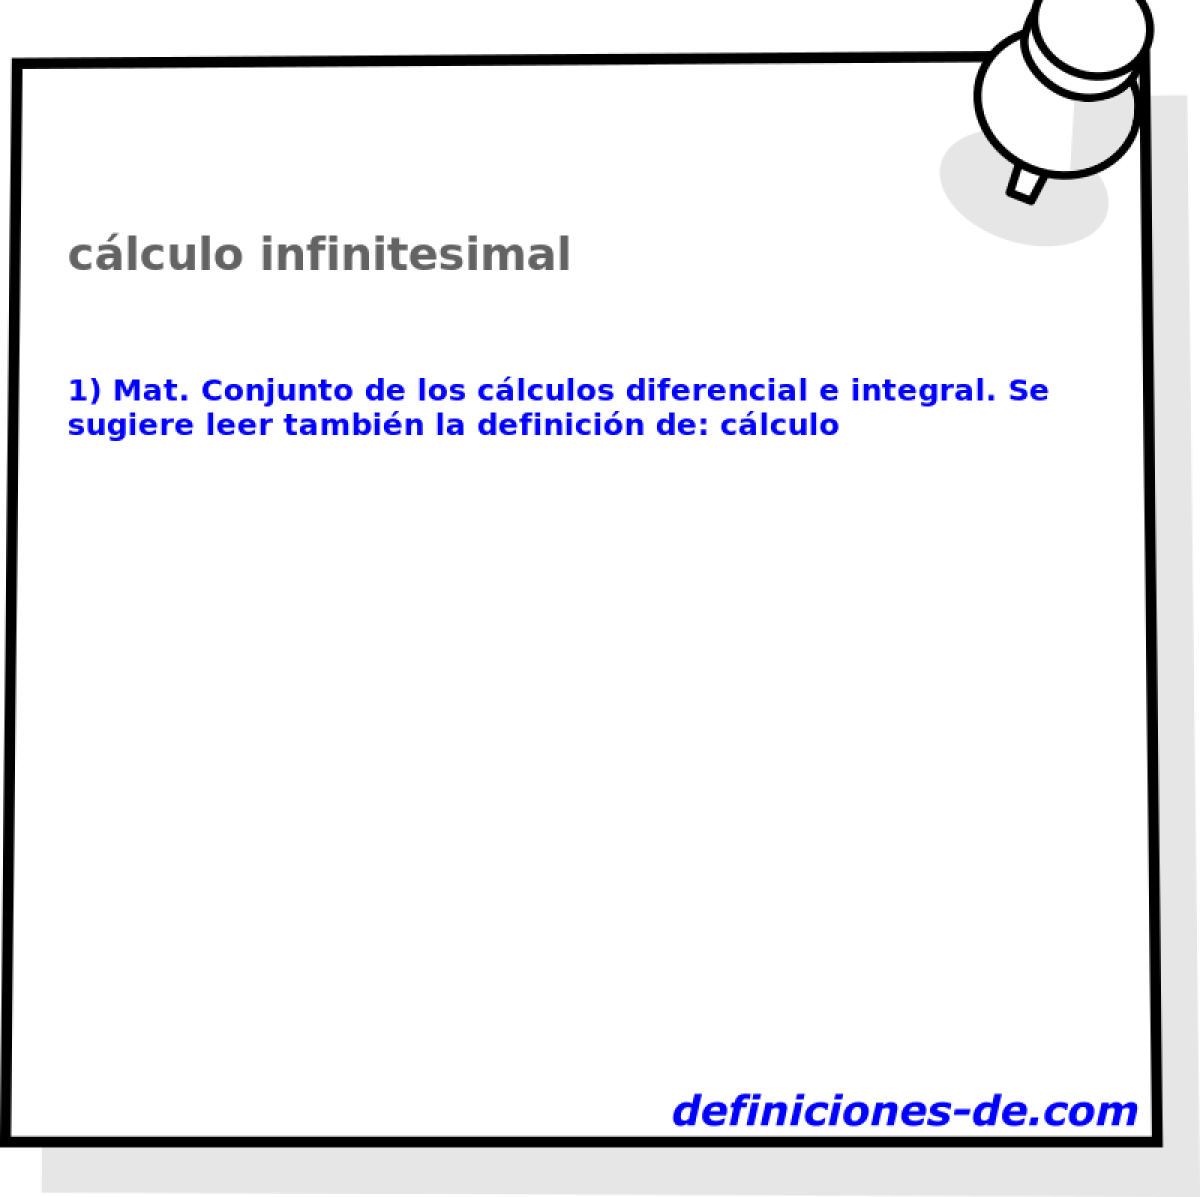 clculo infinitesimal 